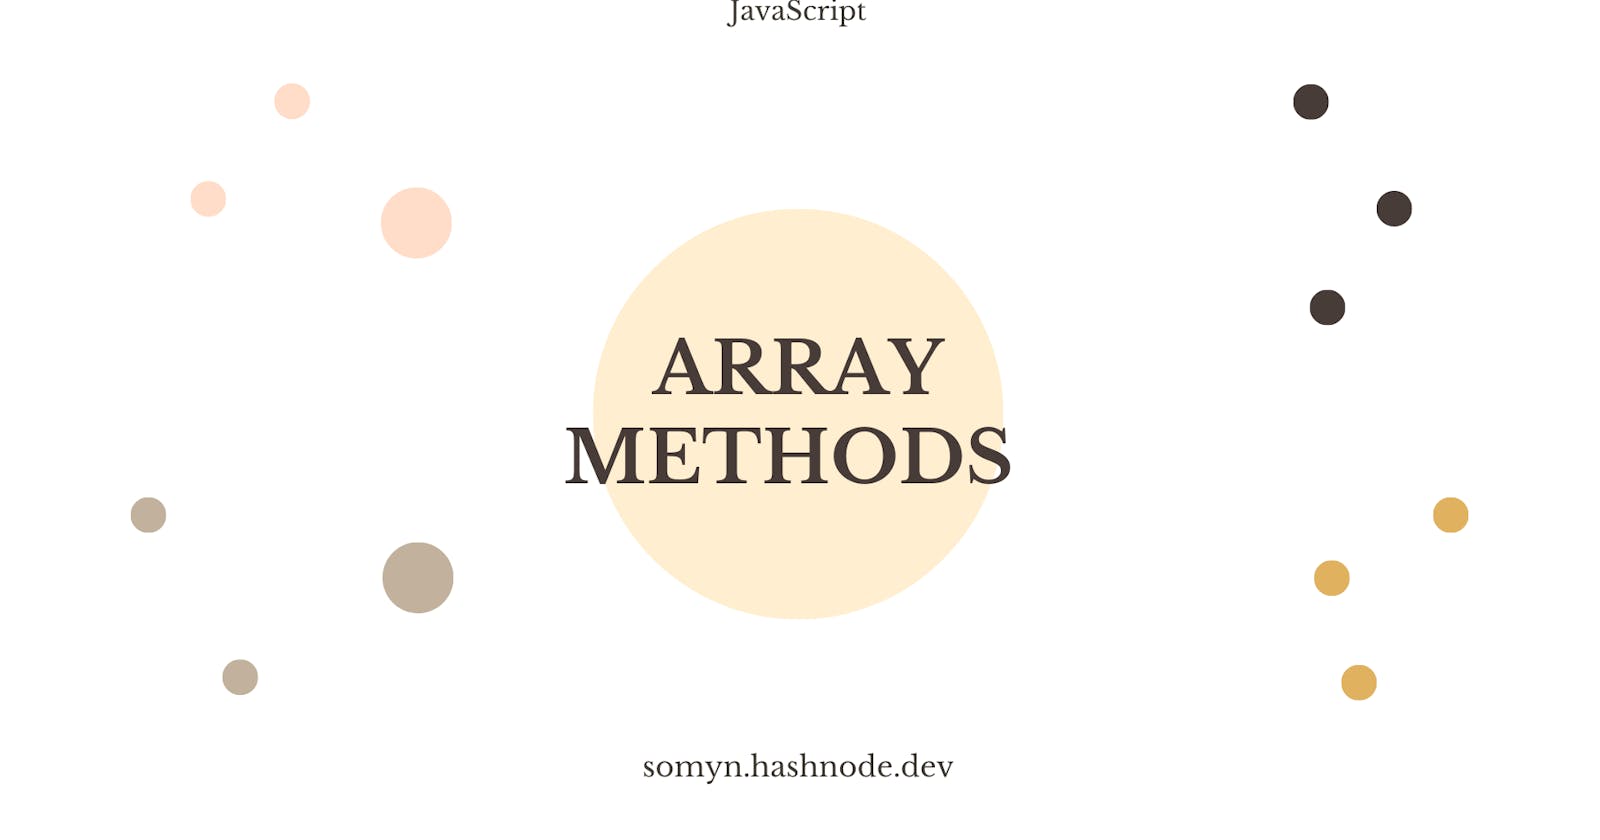 Using Array Methods in JavaScript